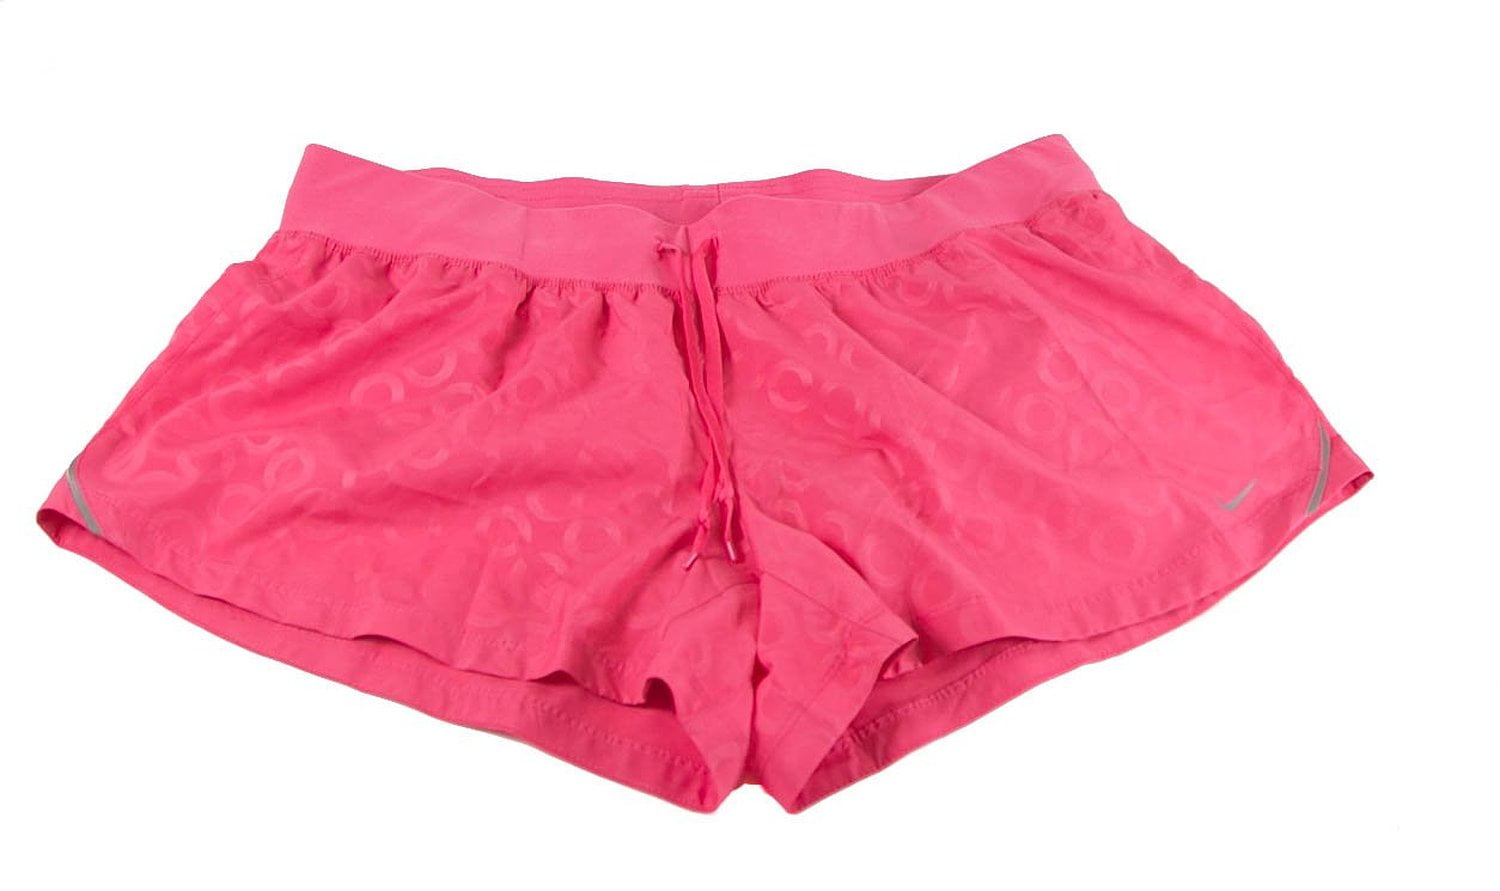 Nike Women's Pink Athletic Running Shorts - Walmart.com